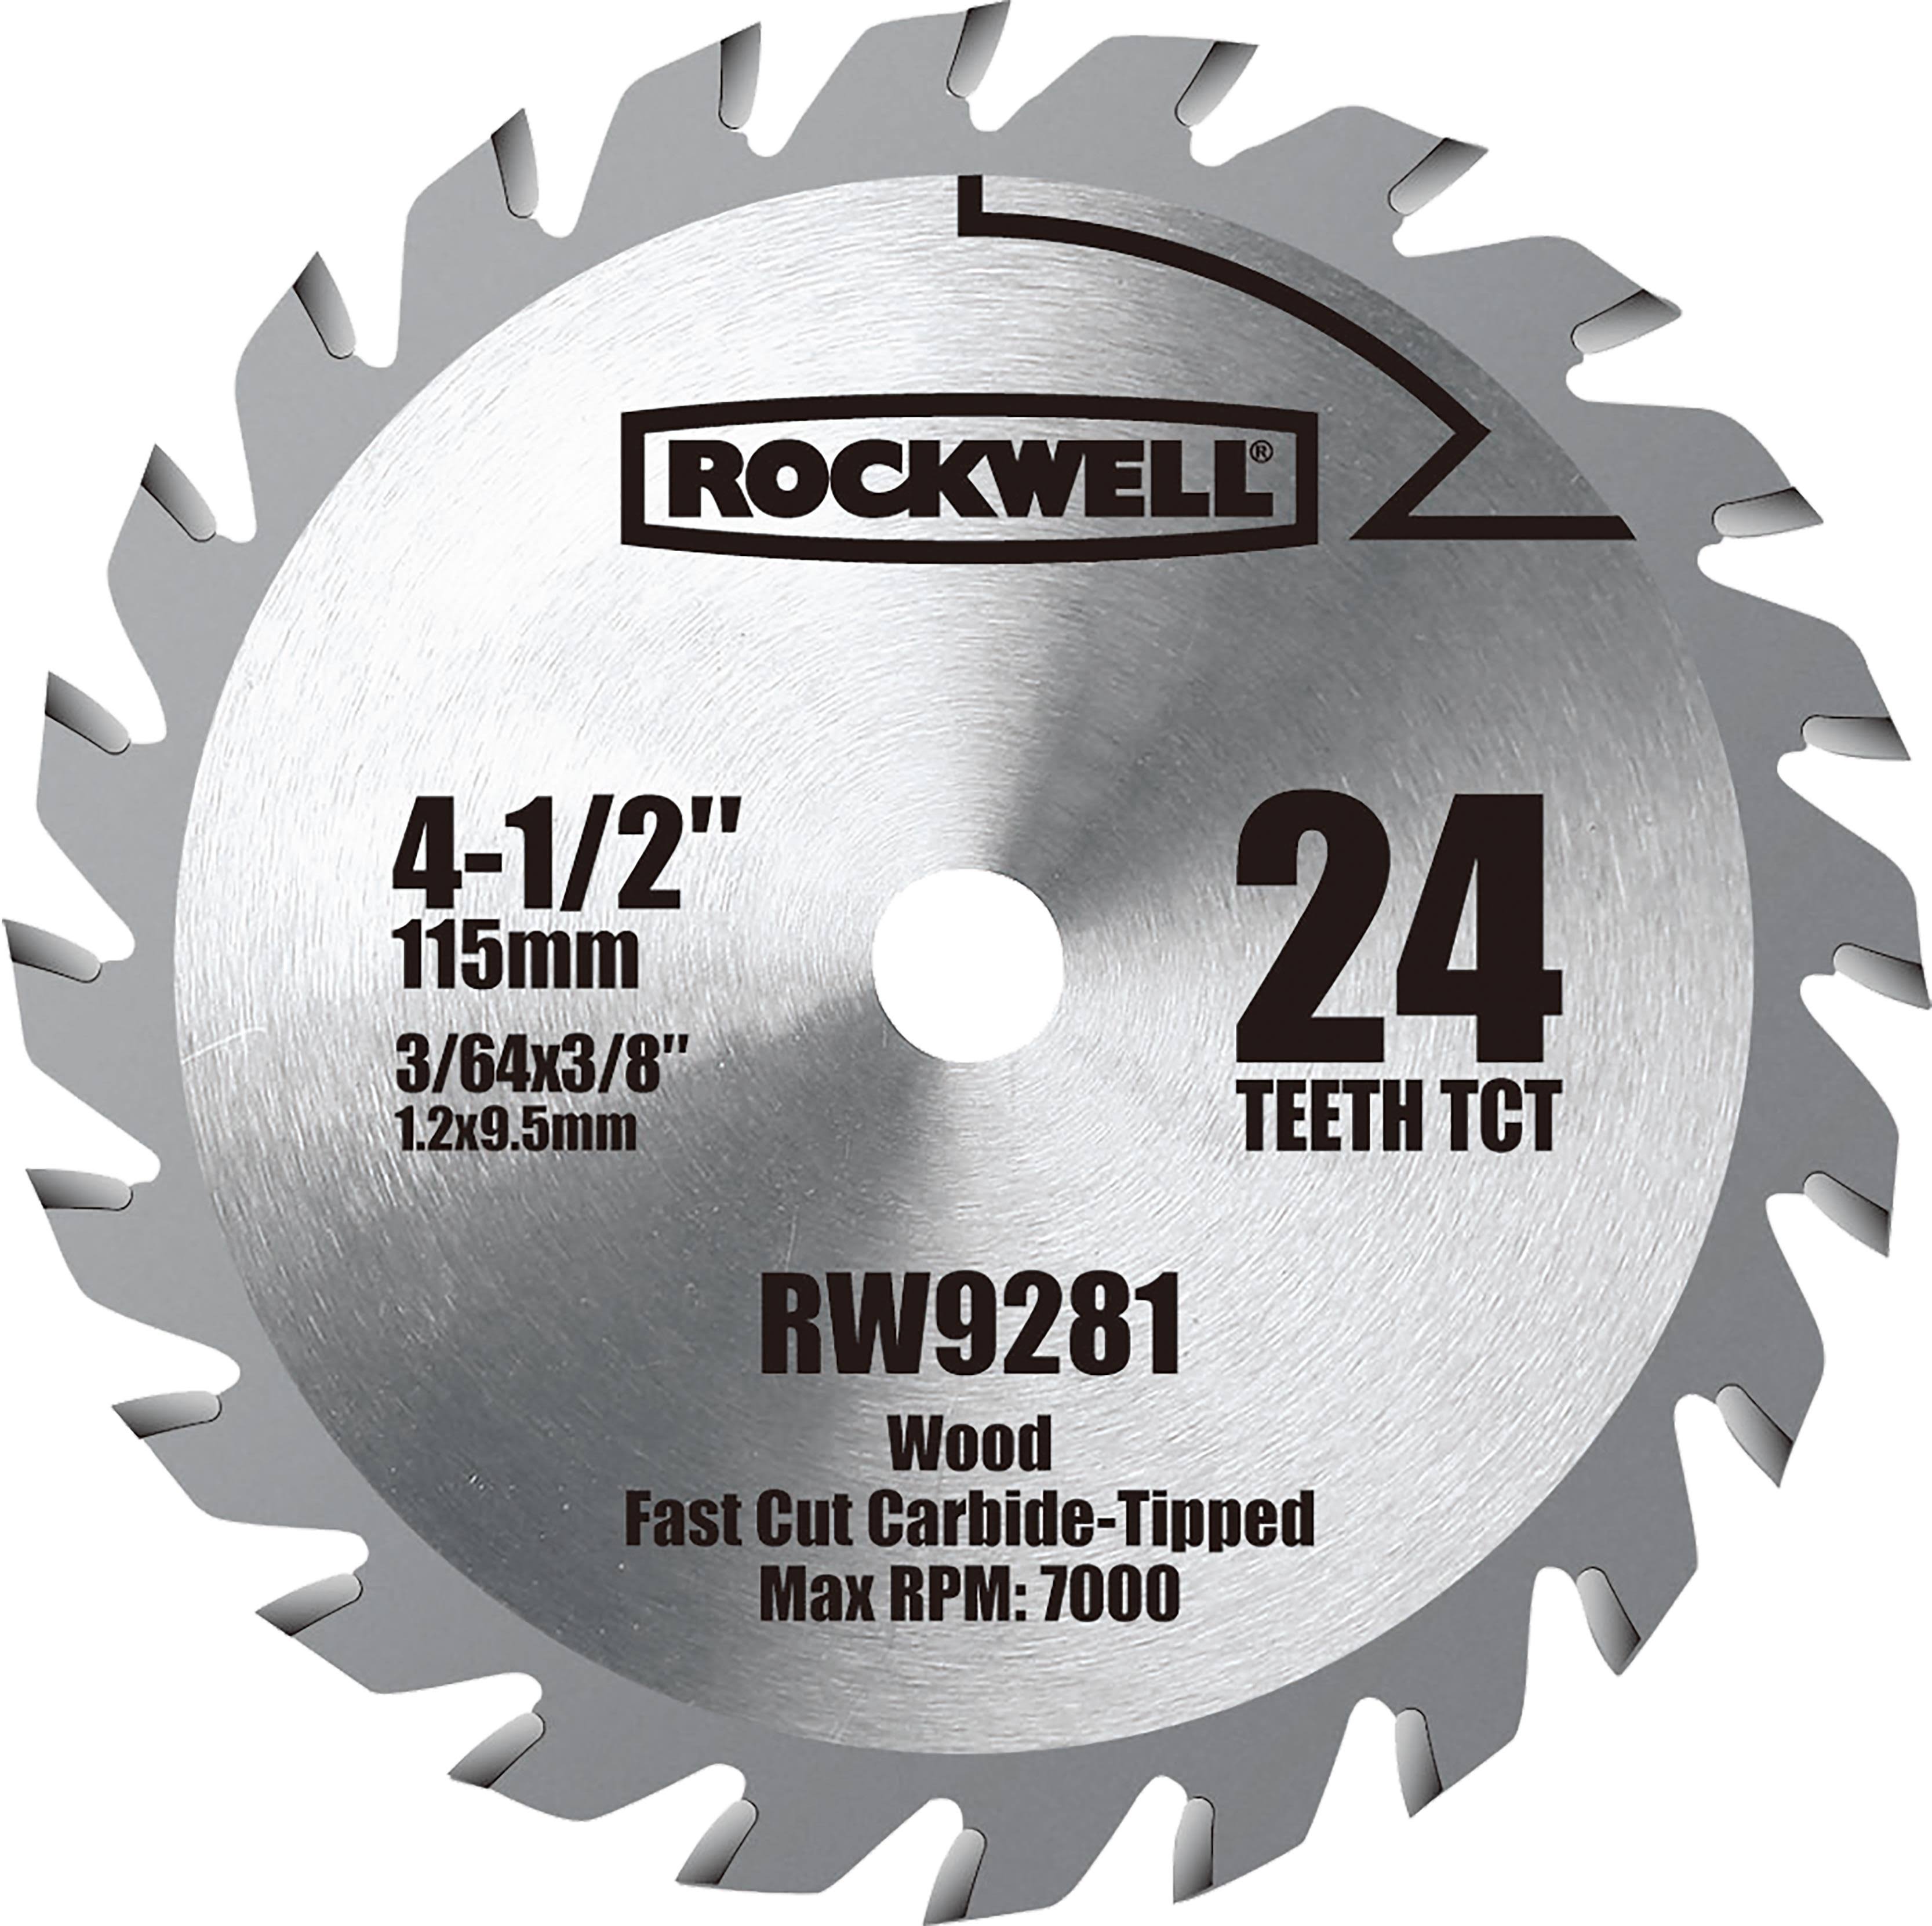 Rockwell Circular Saw Blade - 24 Teeth, 4-1/2", 115mm